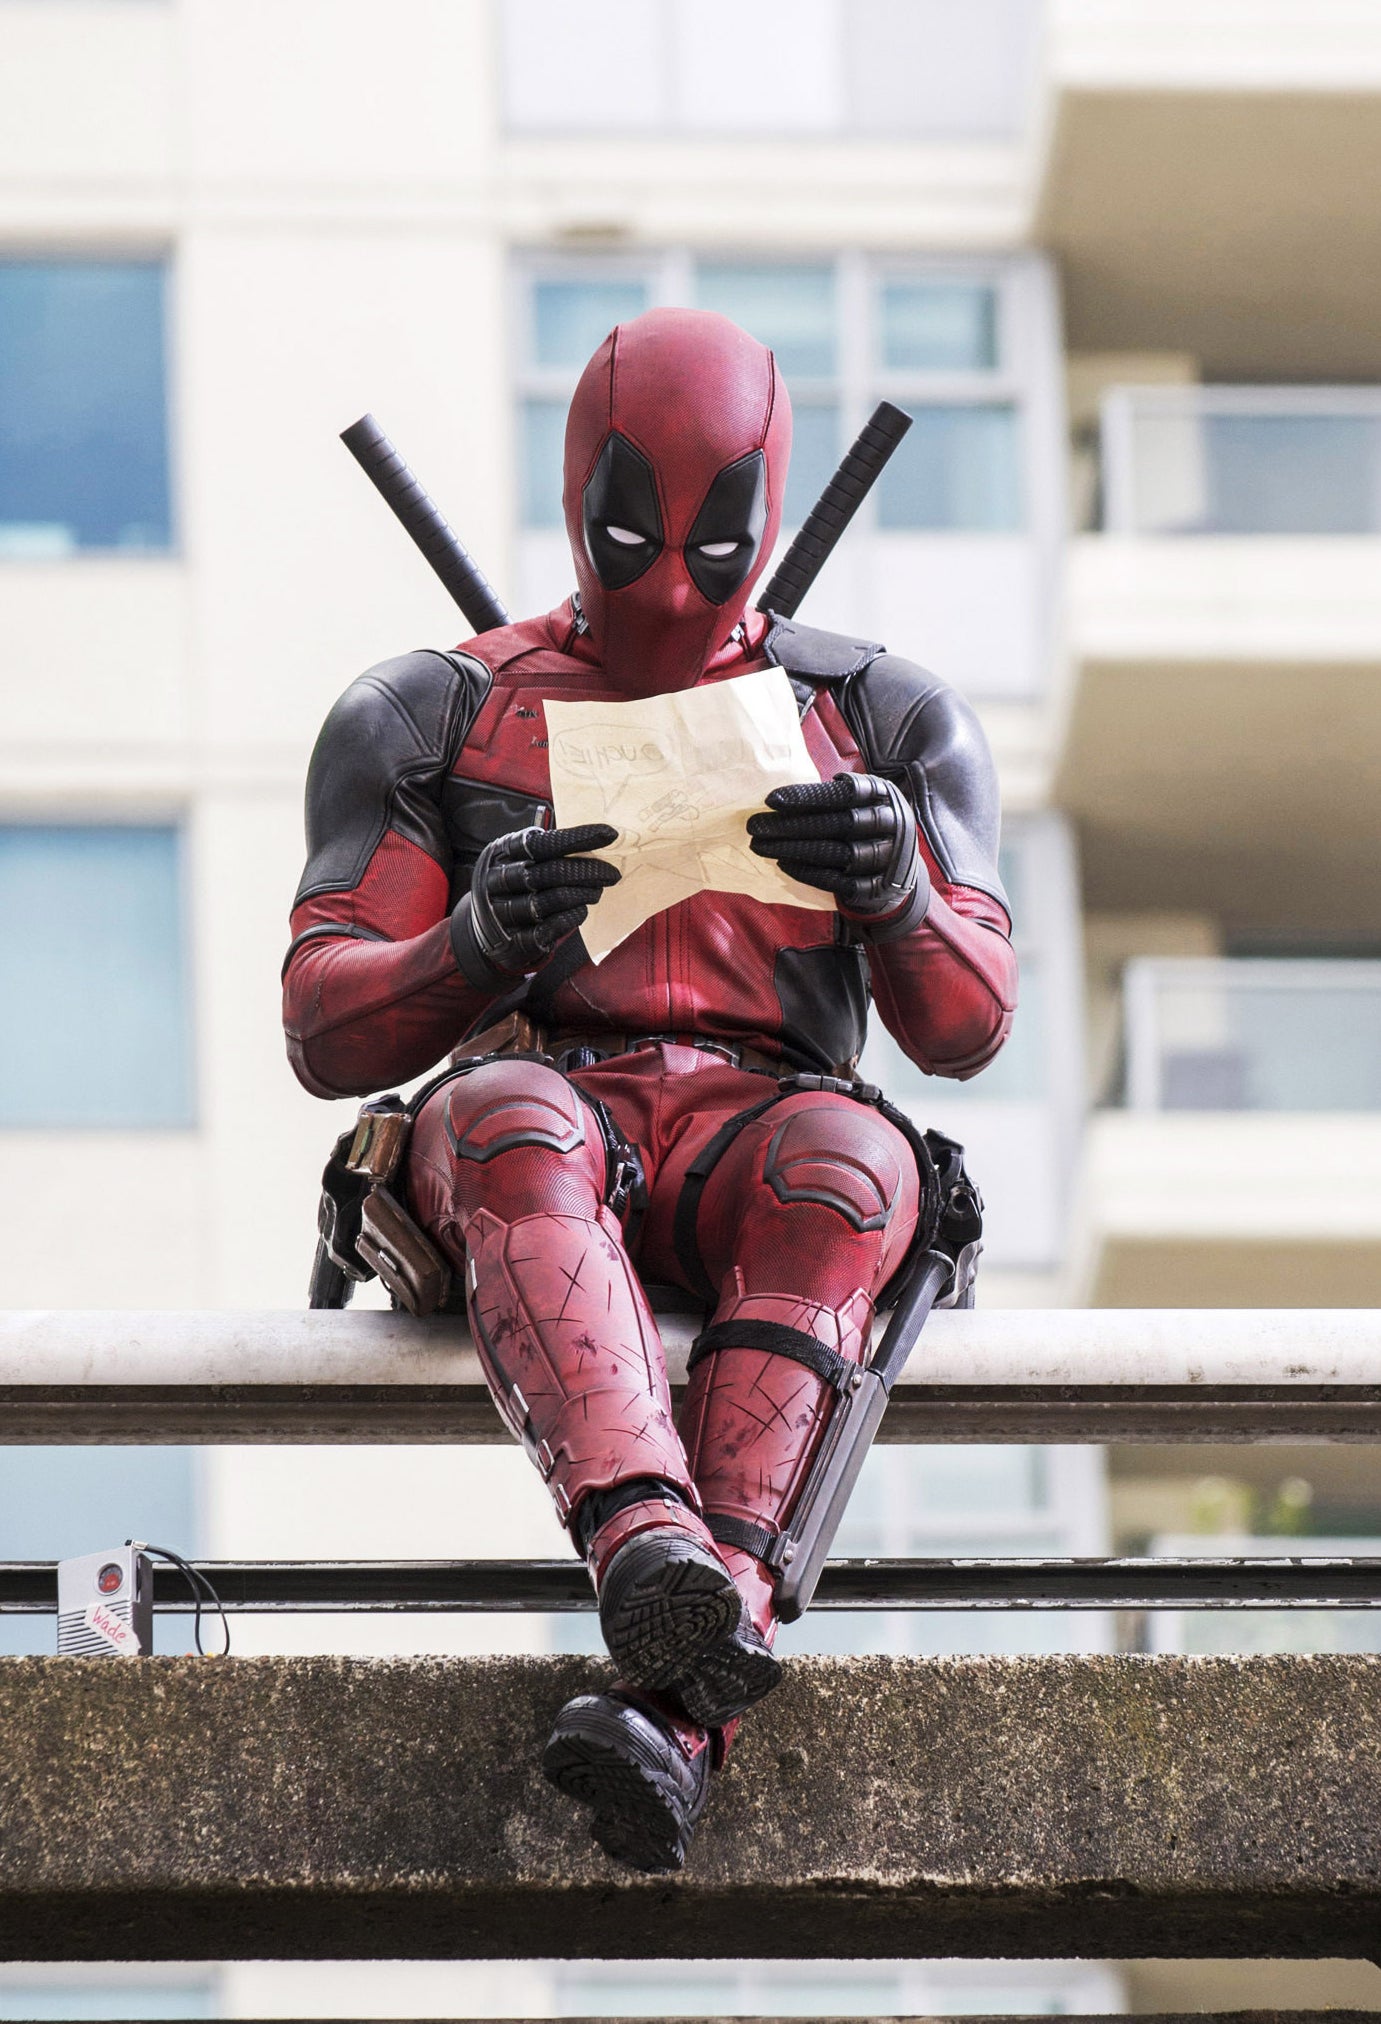 Ryan Reynolds as Wade/Deadpool inspects a piece of paper